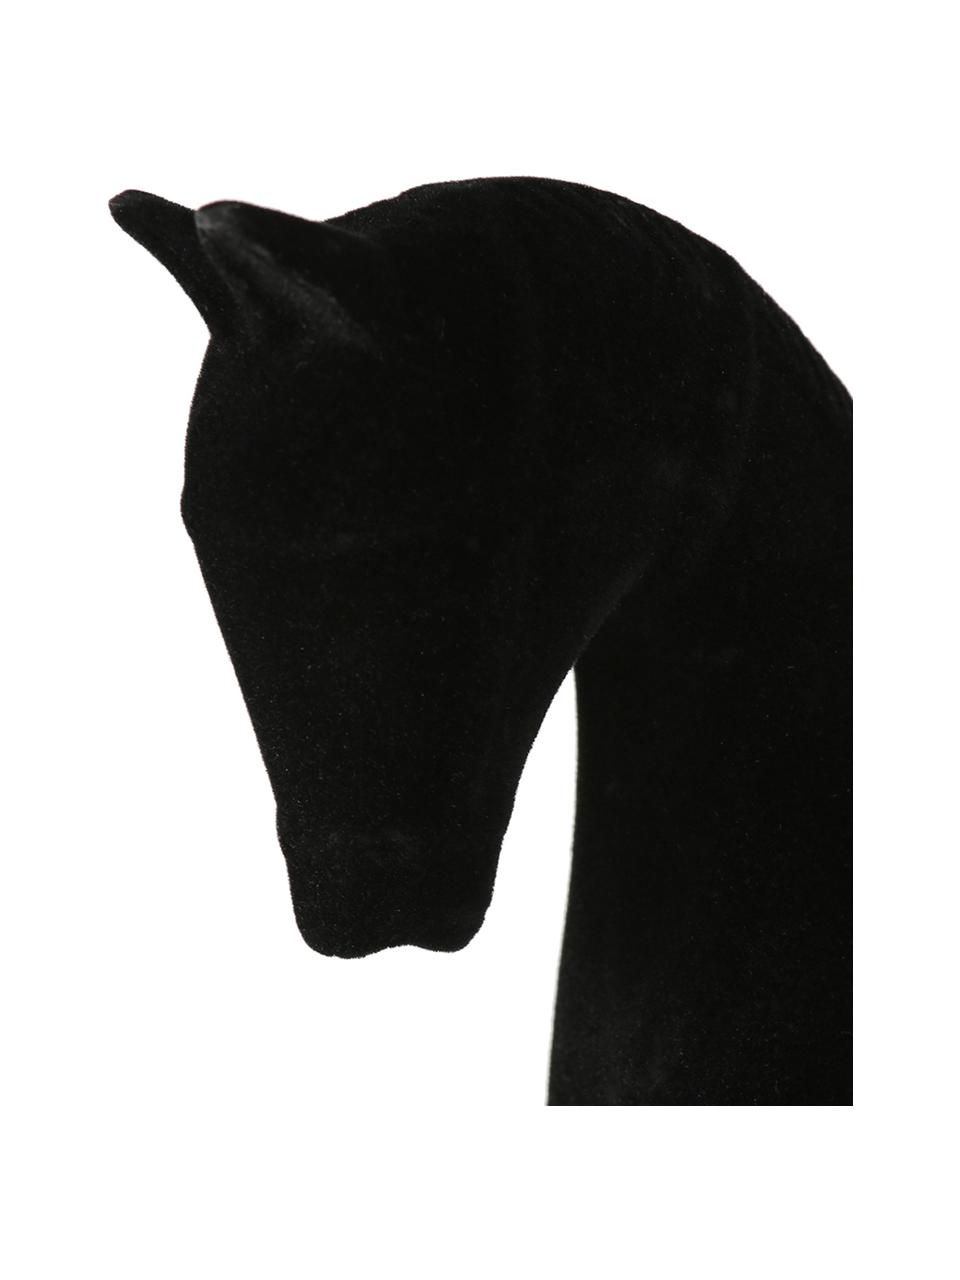 Figura decorativa de terciopelo Rocking Horse, Exterior: terciopelo, Interior: tablero de fibras de dens, Negro, An 26 x Al 22 cm